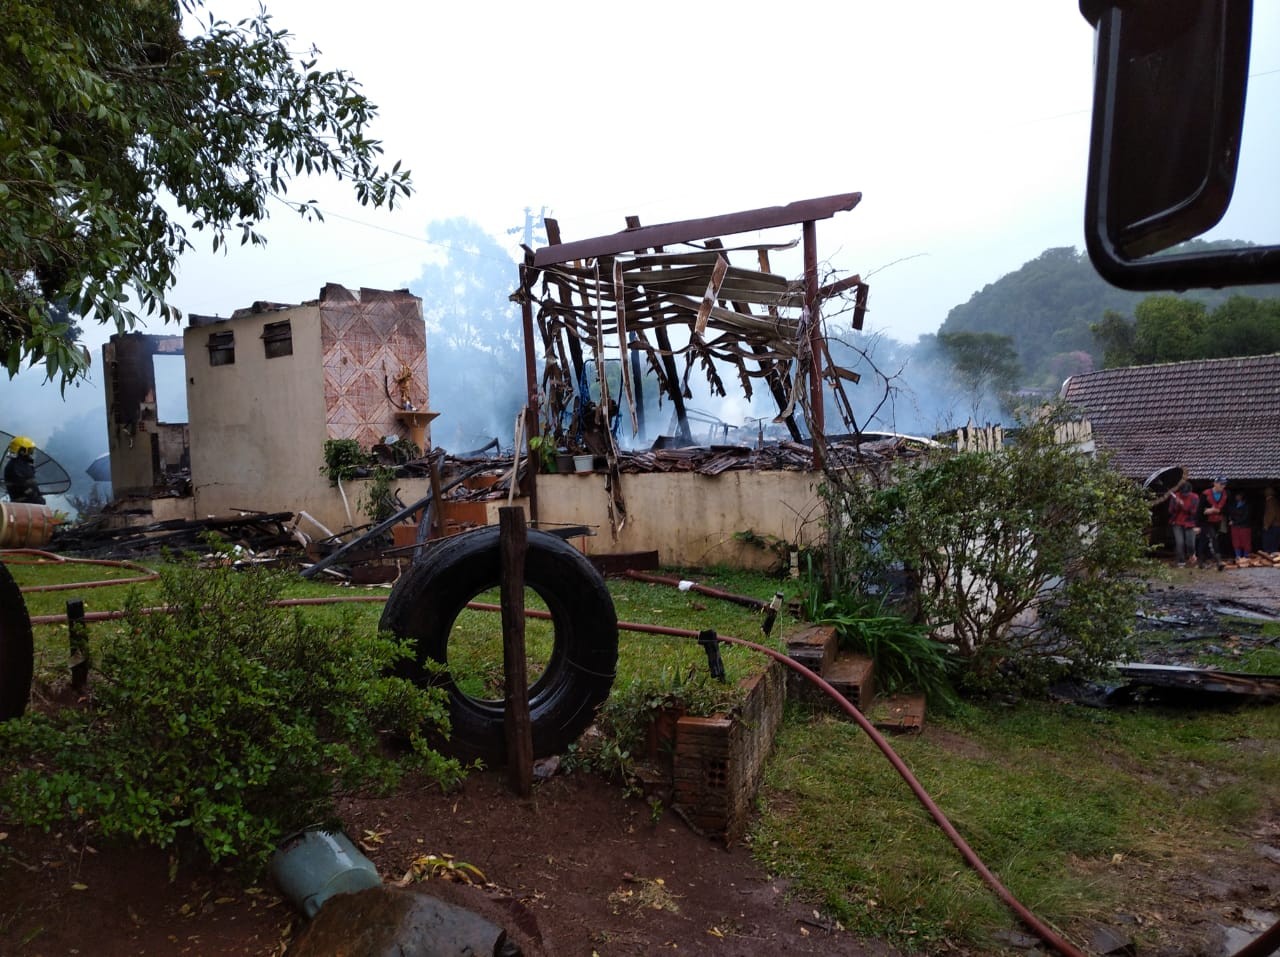 Casa no interior de Cunha Porã é consumida pelas chamas